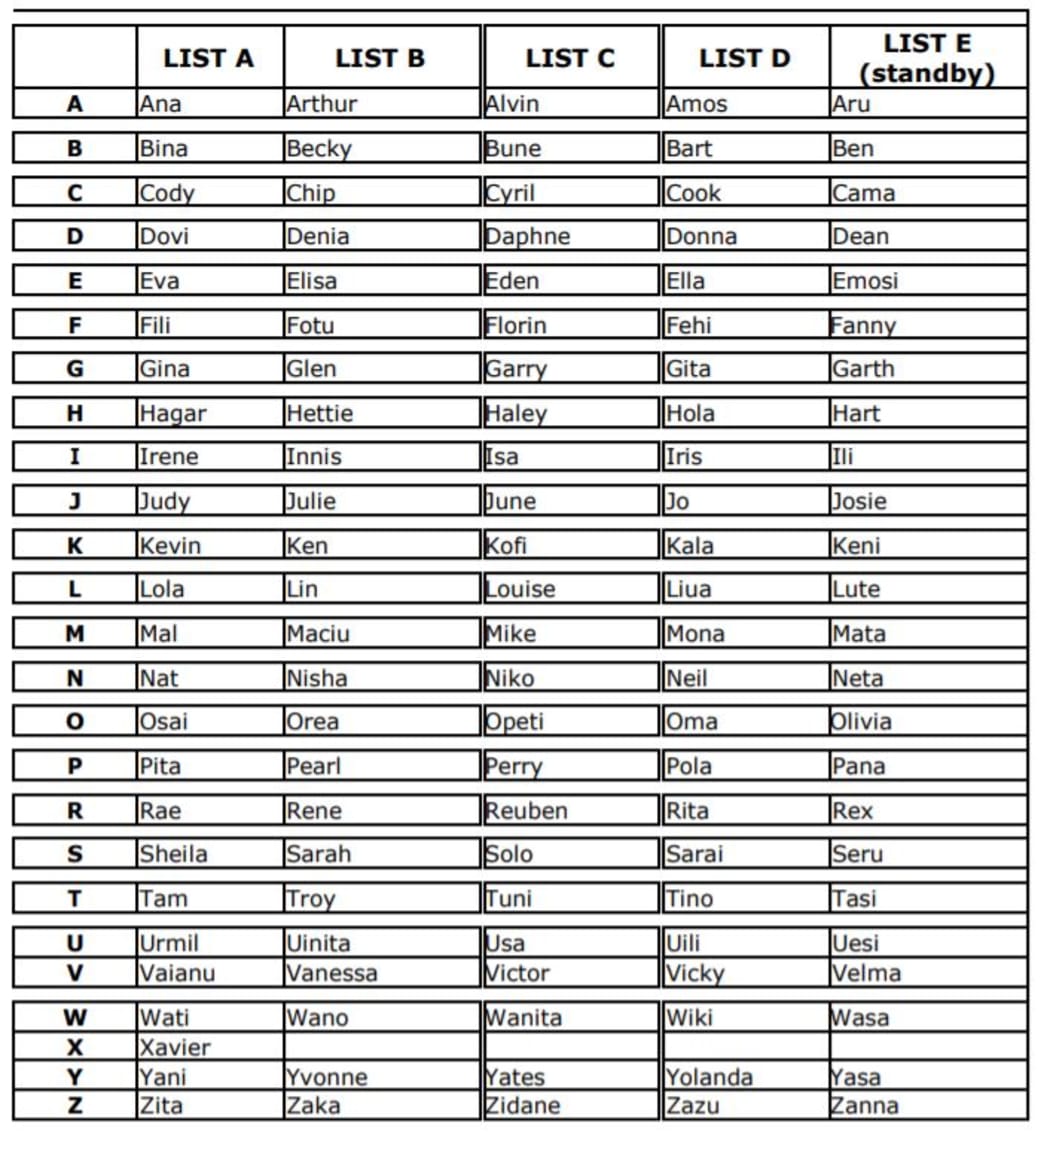 Basin 7's name lists